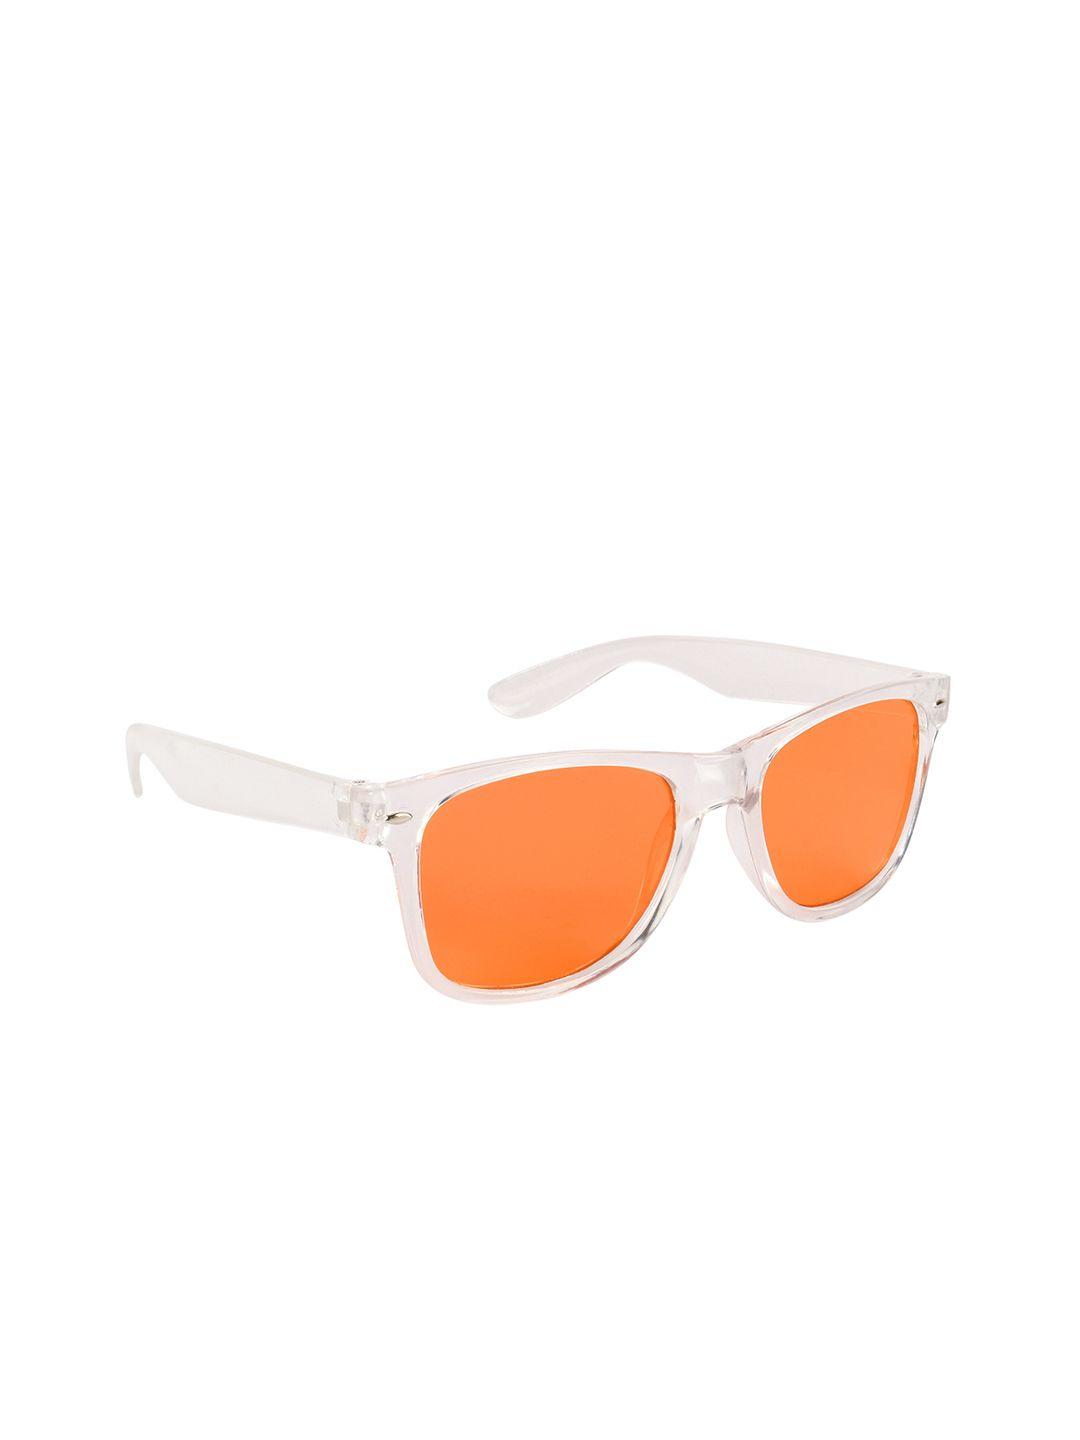 nuvew unisex orange lens & white wayfarer sunglasses with uv protected lens